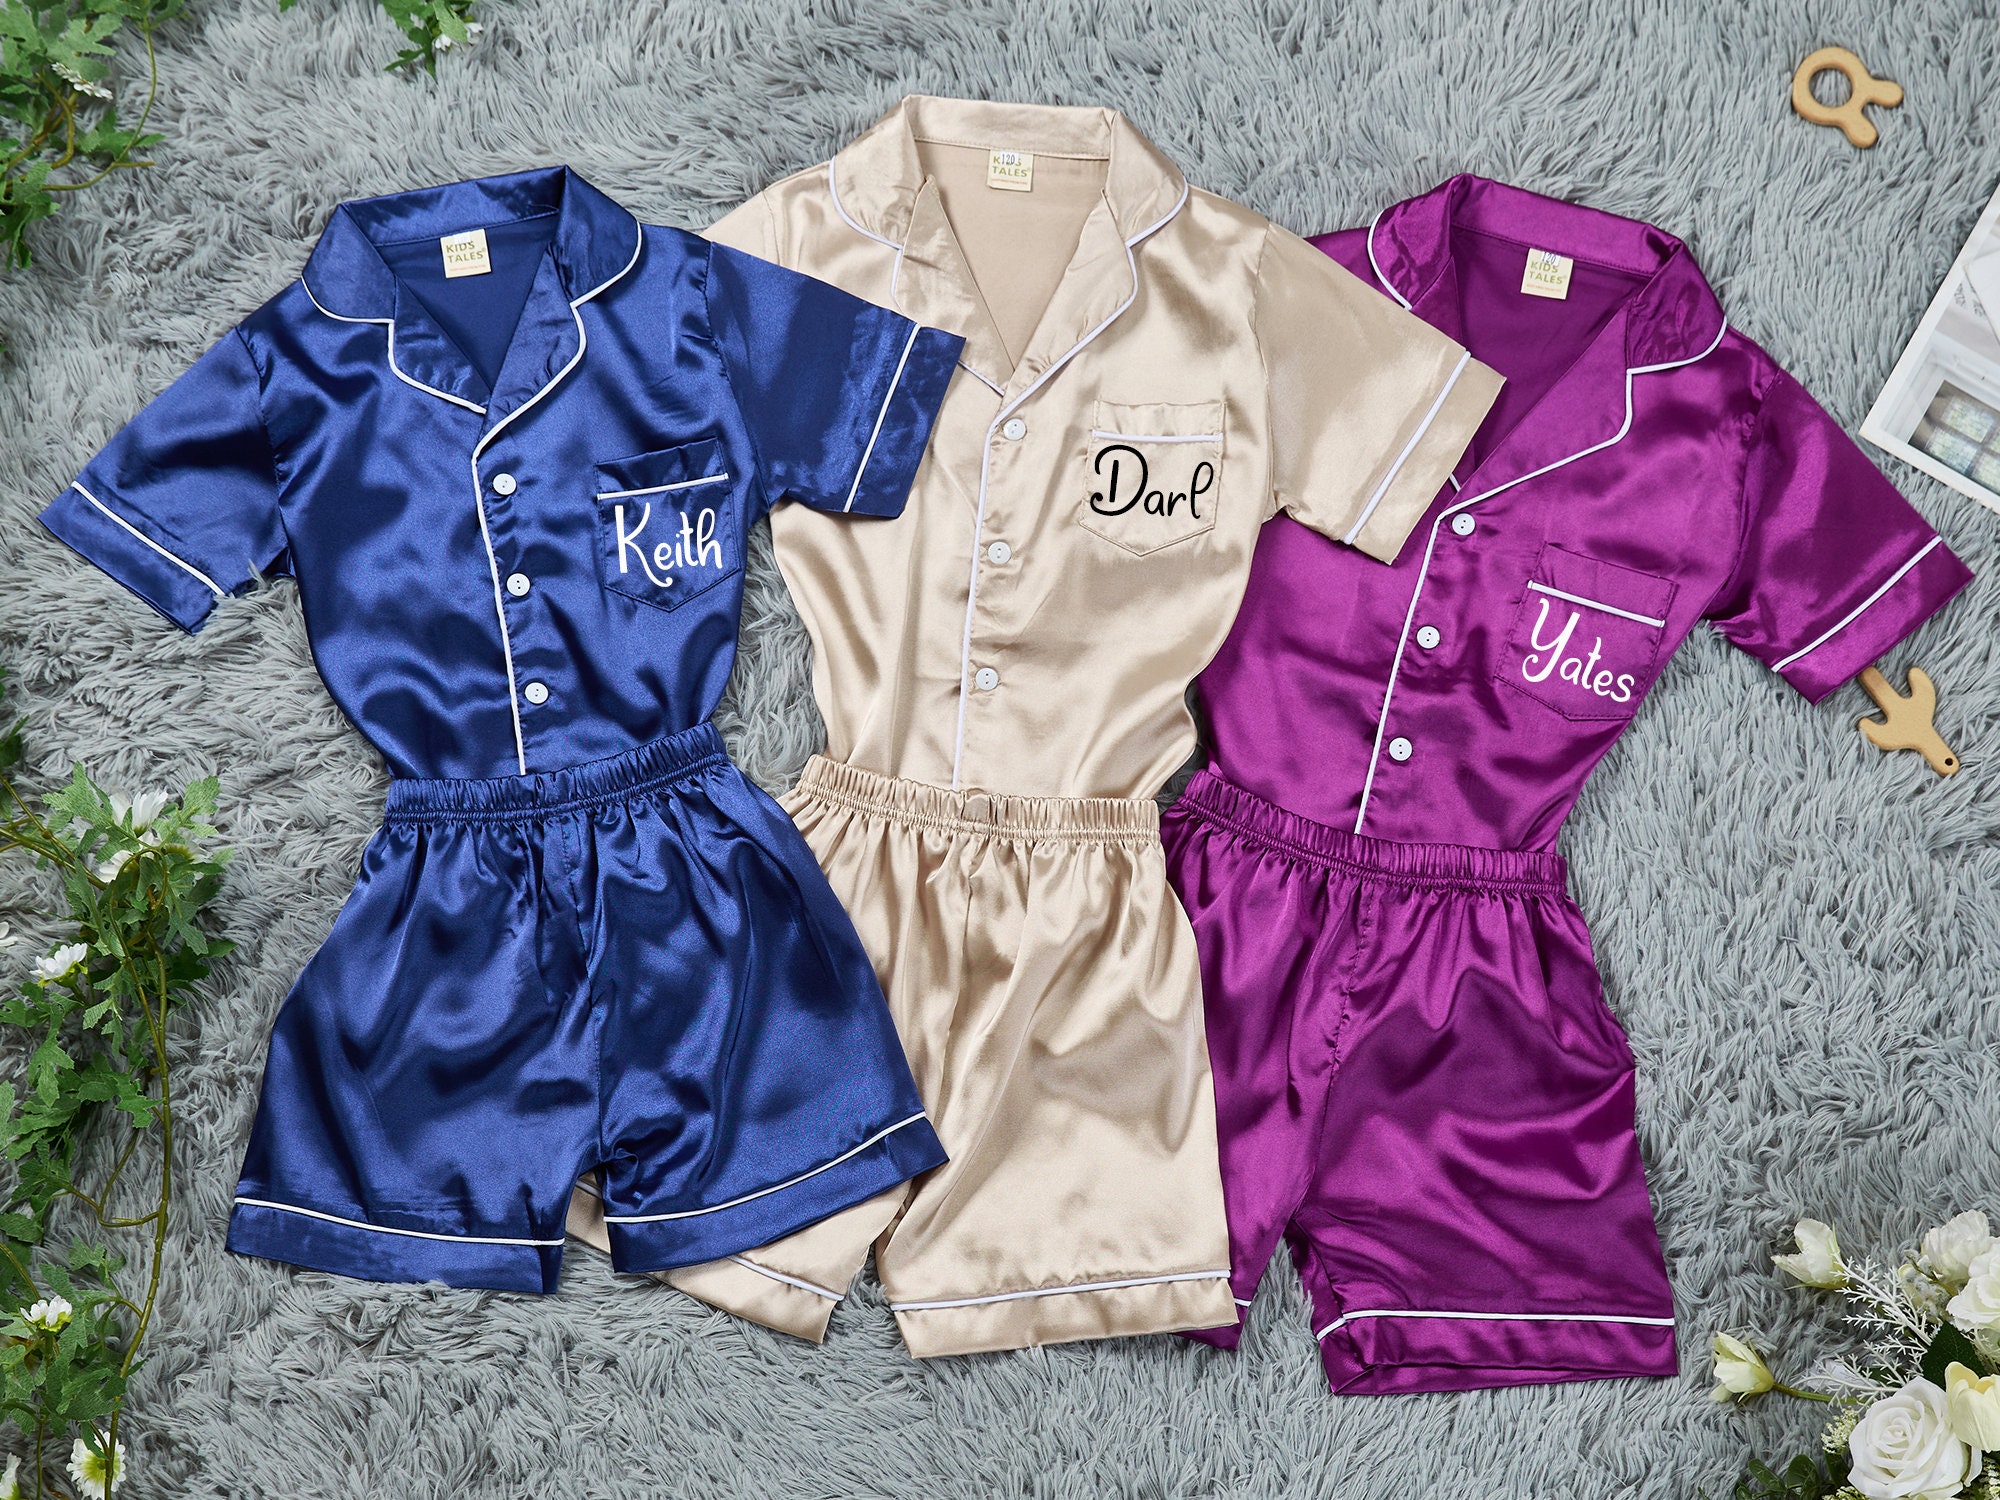 HOT Louis Vuitton Pink Color Custom Pajamas Set • Kybershop